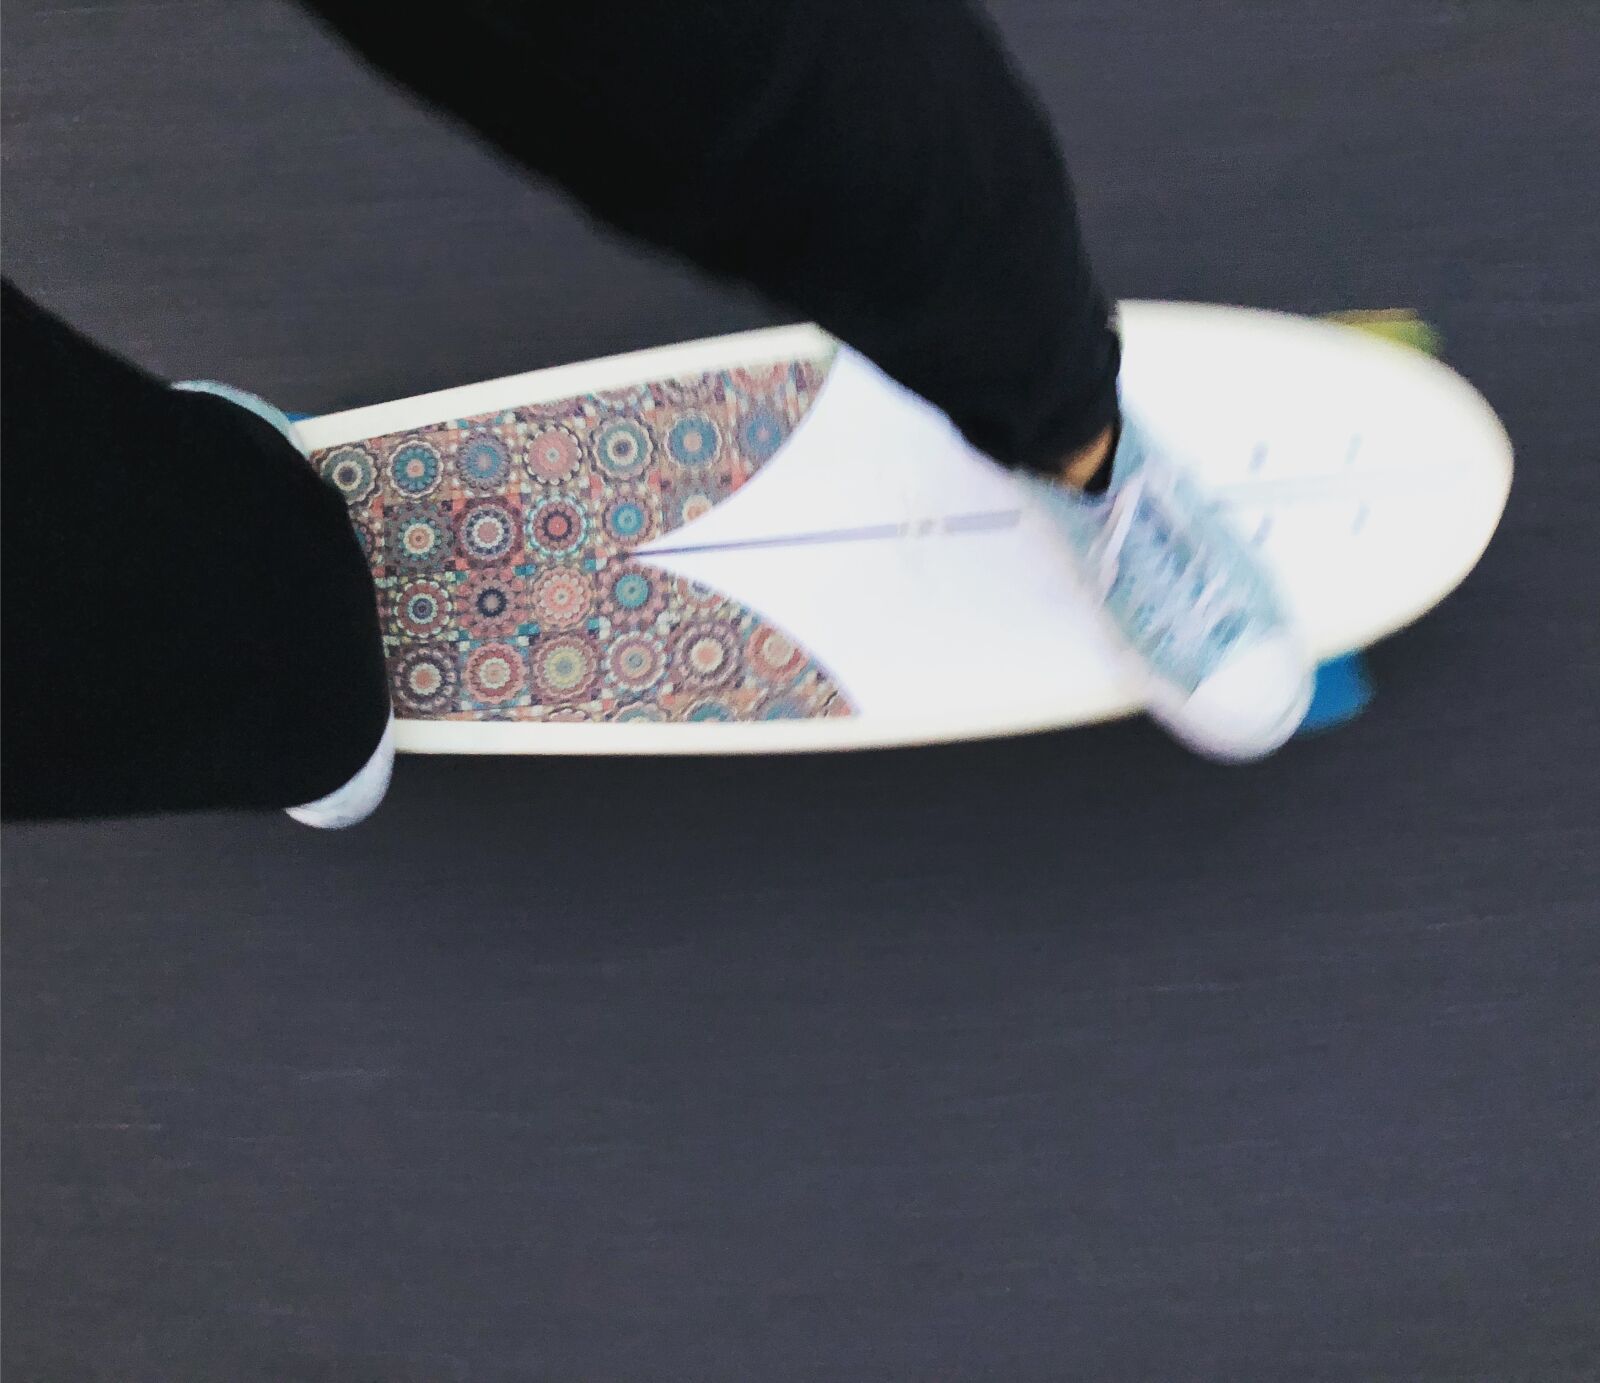 iPhone X back dual camera 4mm f/1.8 sample photo. Skating, skateboard, lifestyle photography